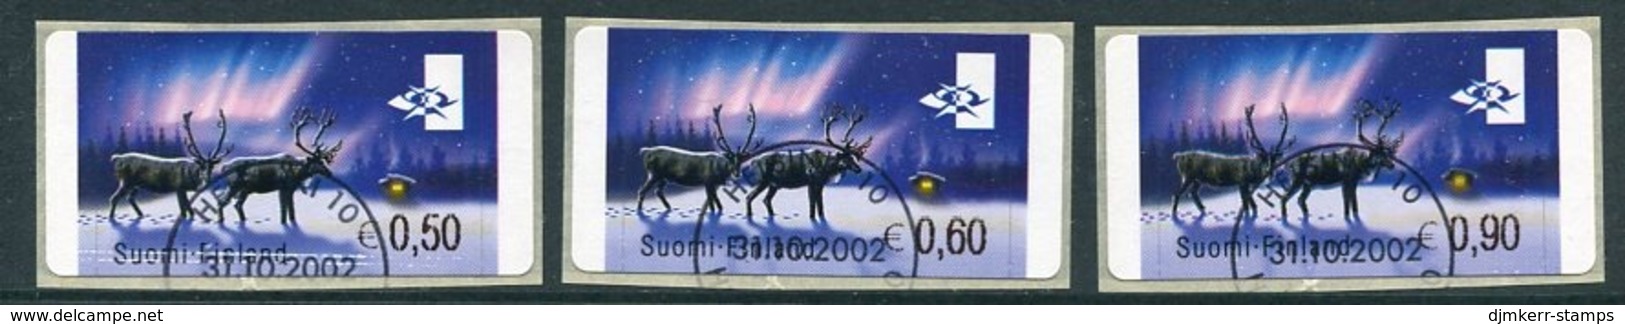 FINLAND 2002 Reindeer ATM, Three Values Used.  Michel 37 - Vignette [ATM]